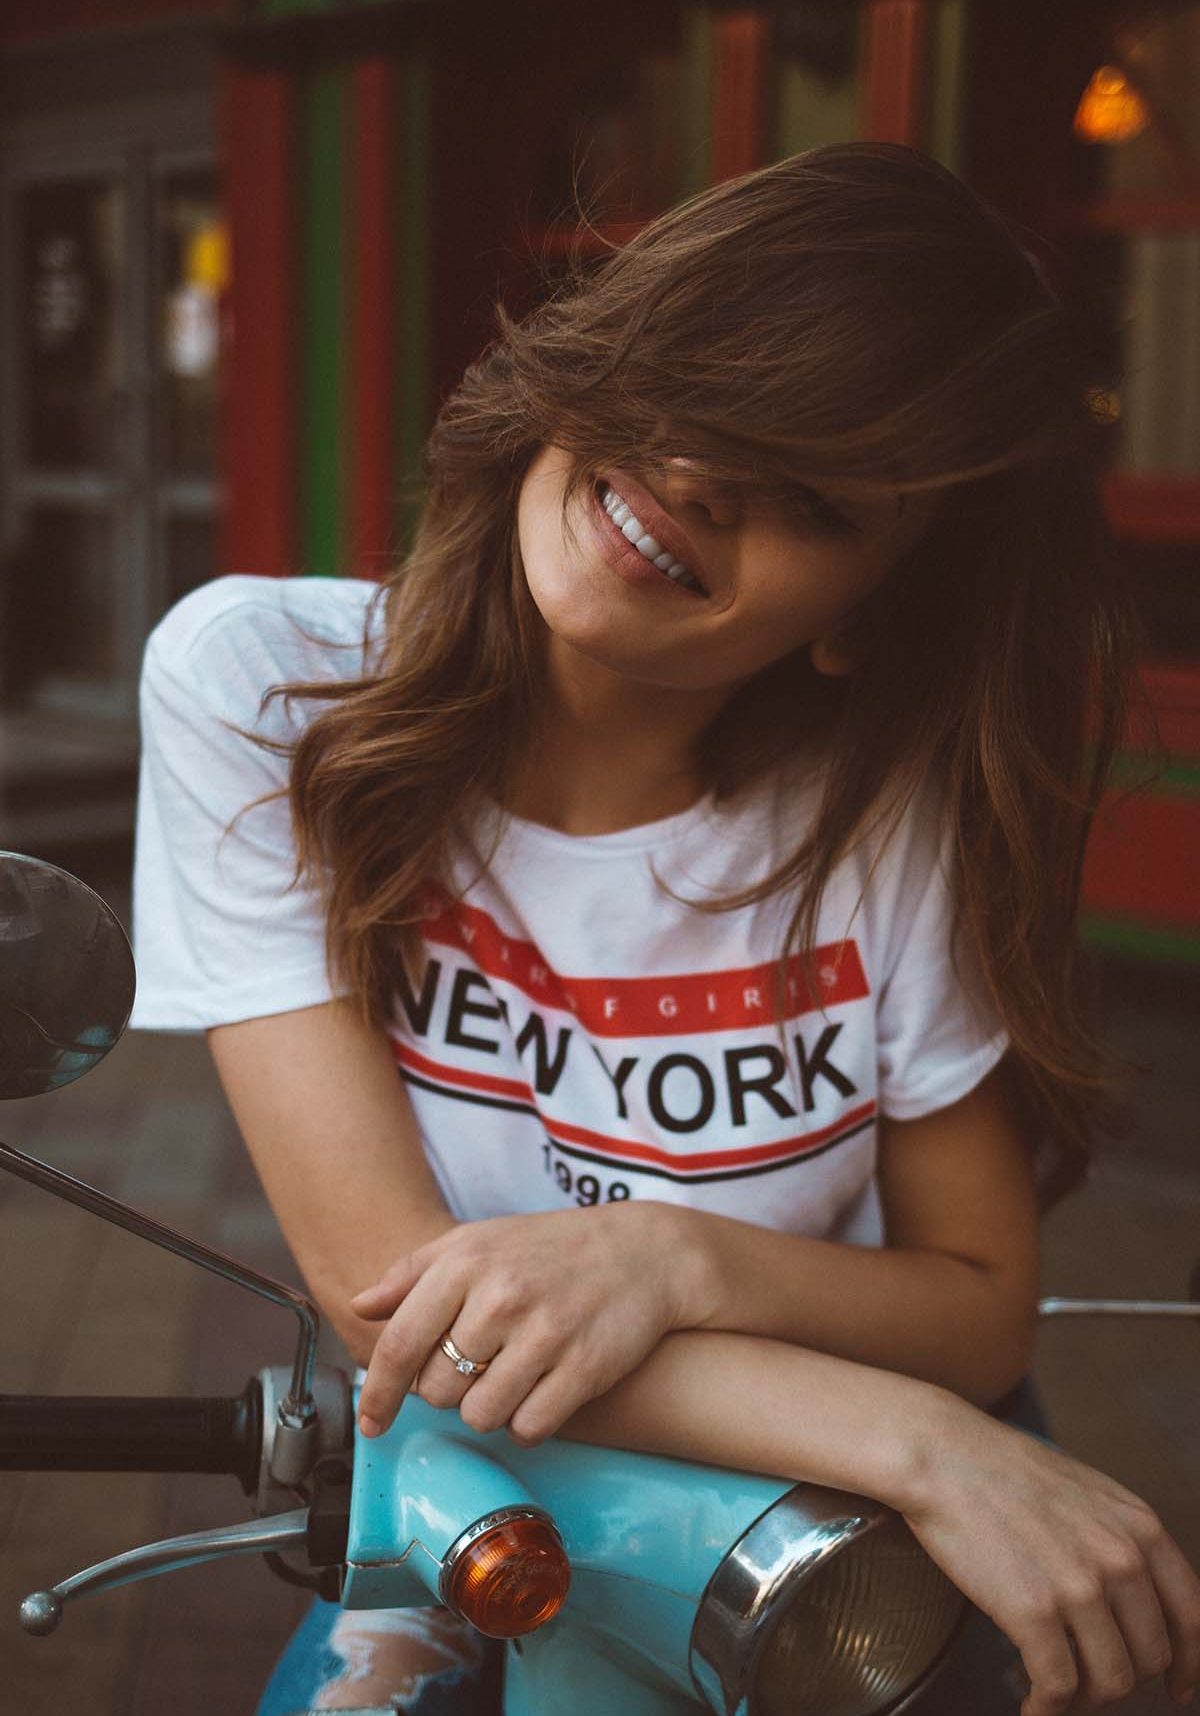 A beautiful girl New York